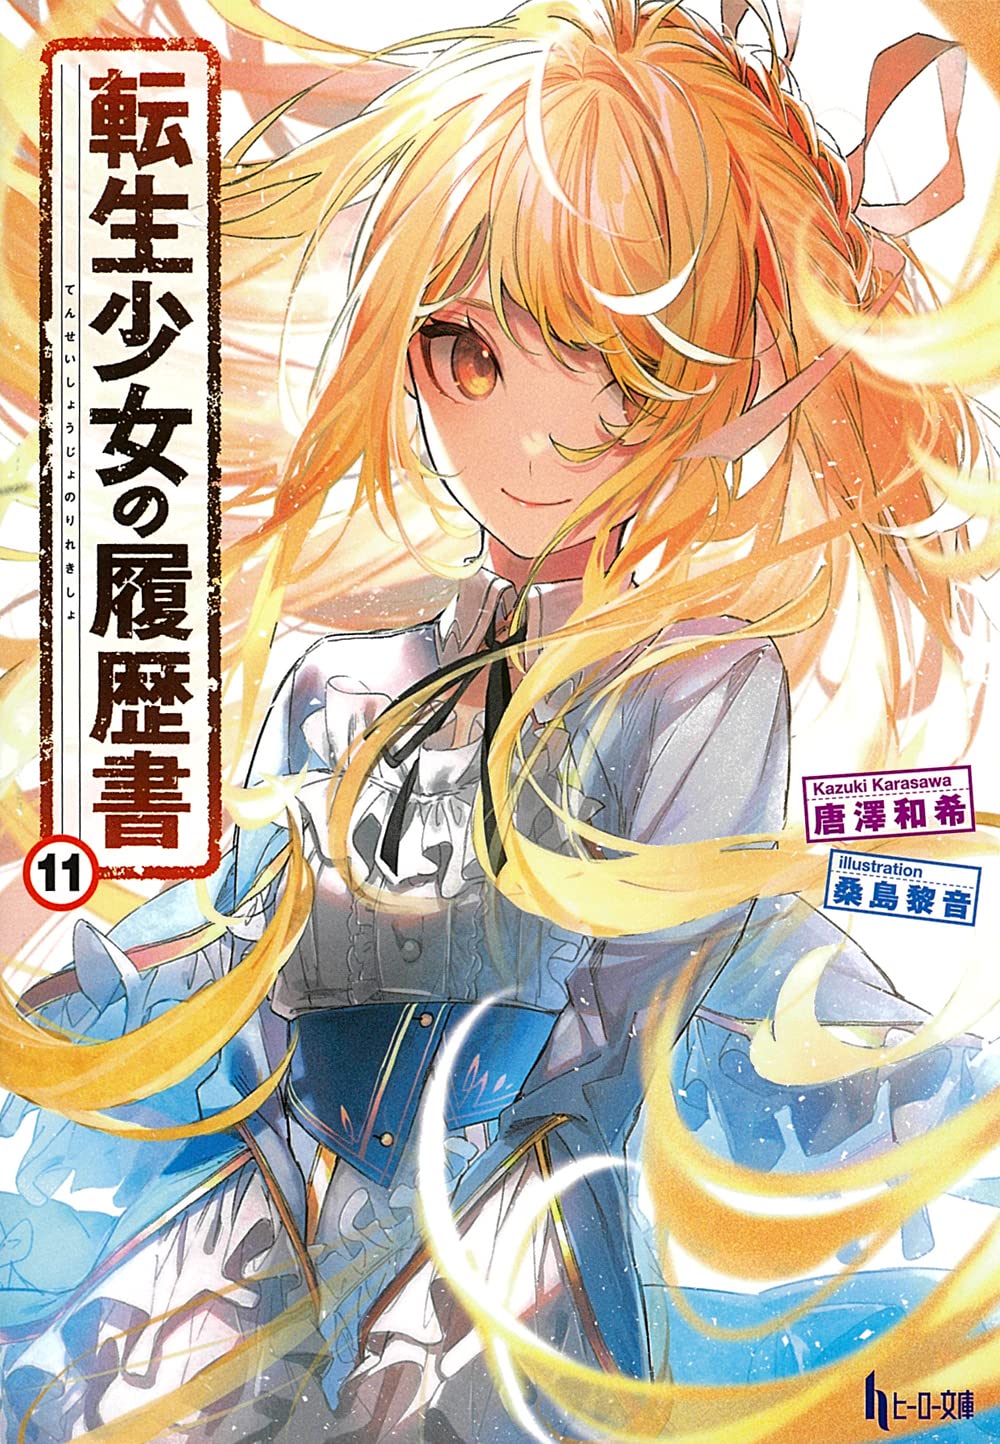 Manga Volume 12, Tensei Kenja Wiki